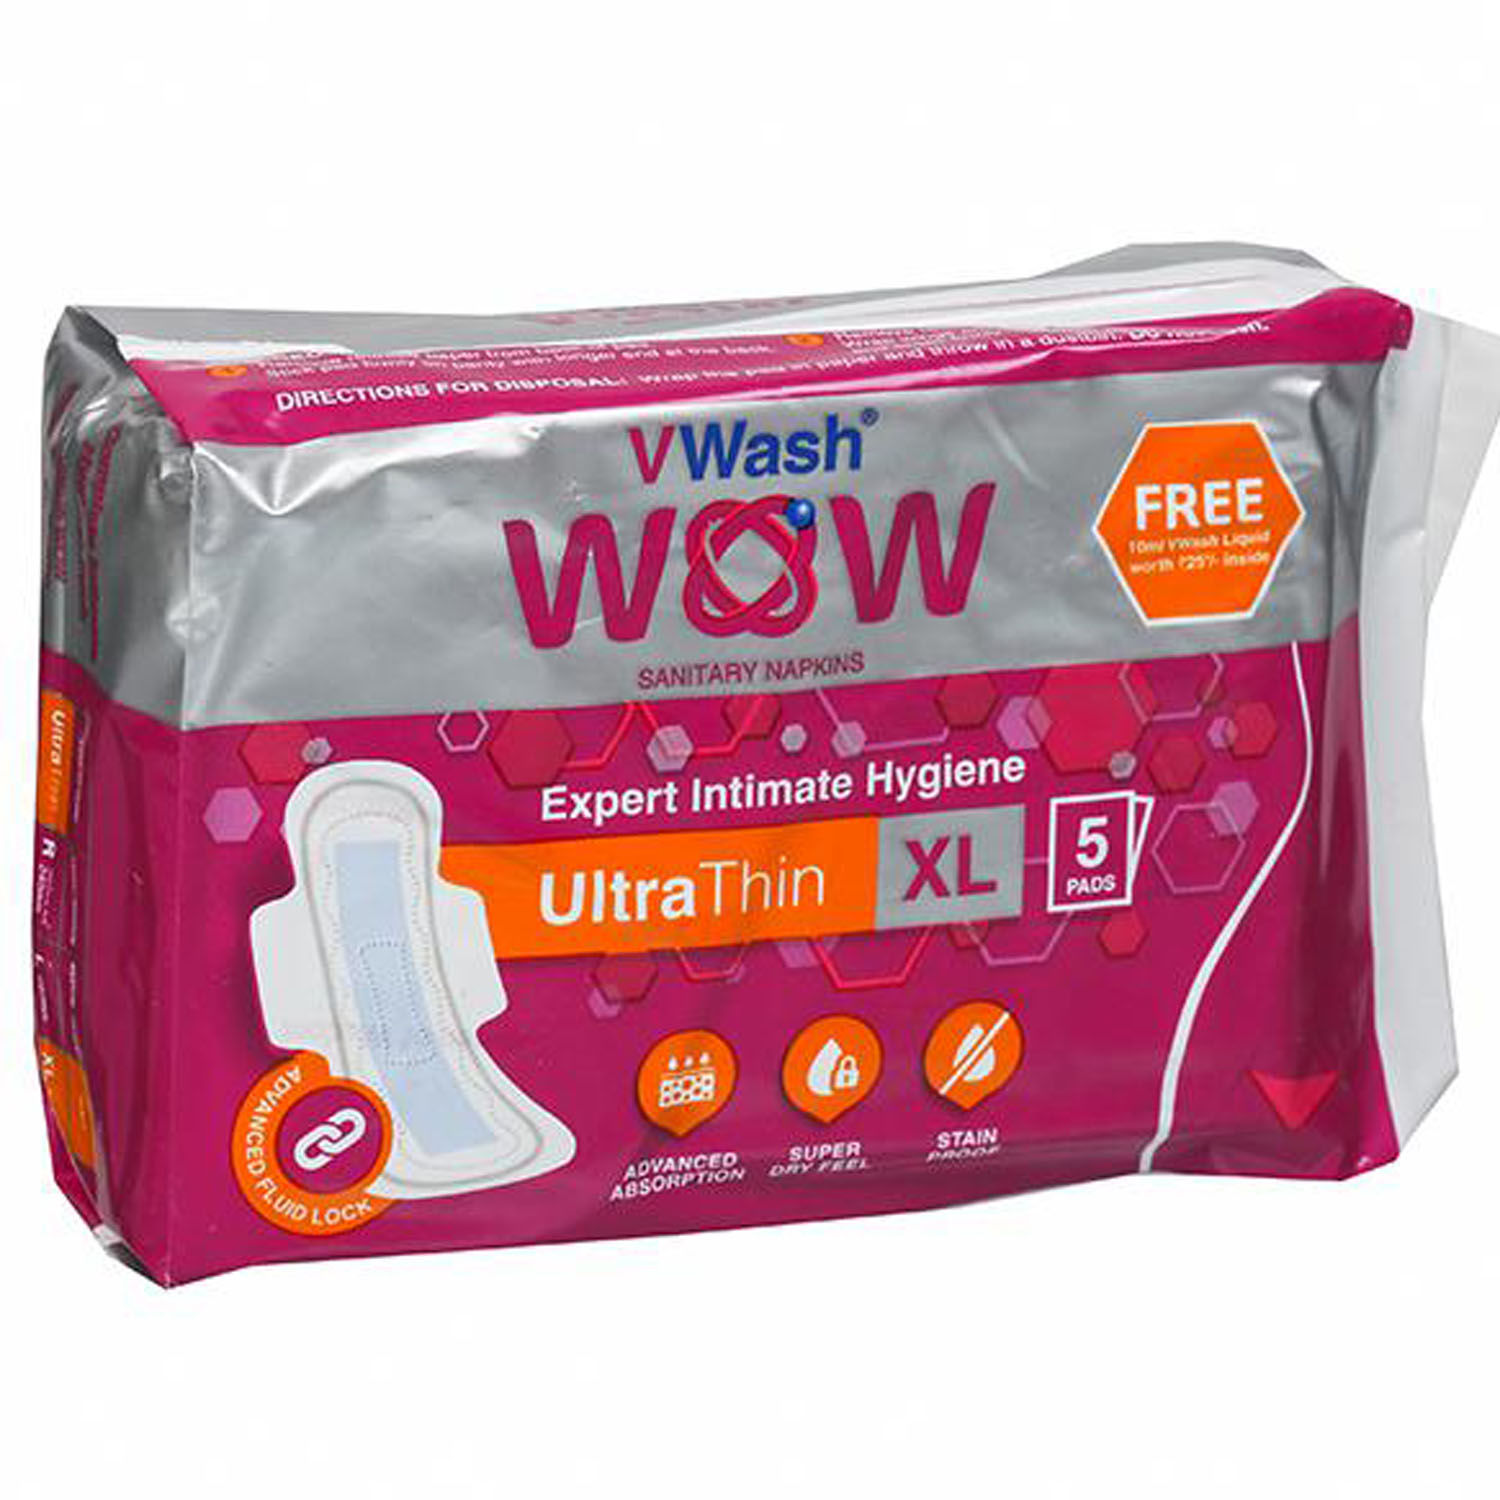 Buy VWash Wow Ultra Thin Sanitary Napkins, XL, 5 Count Online